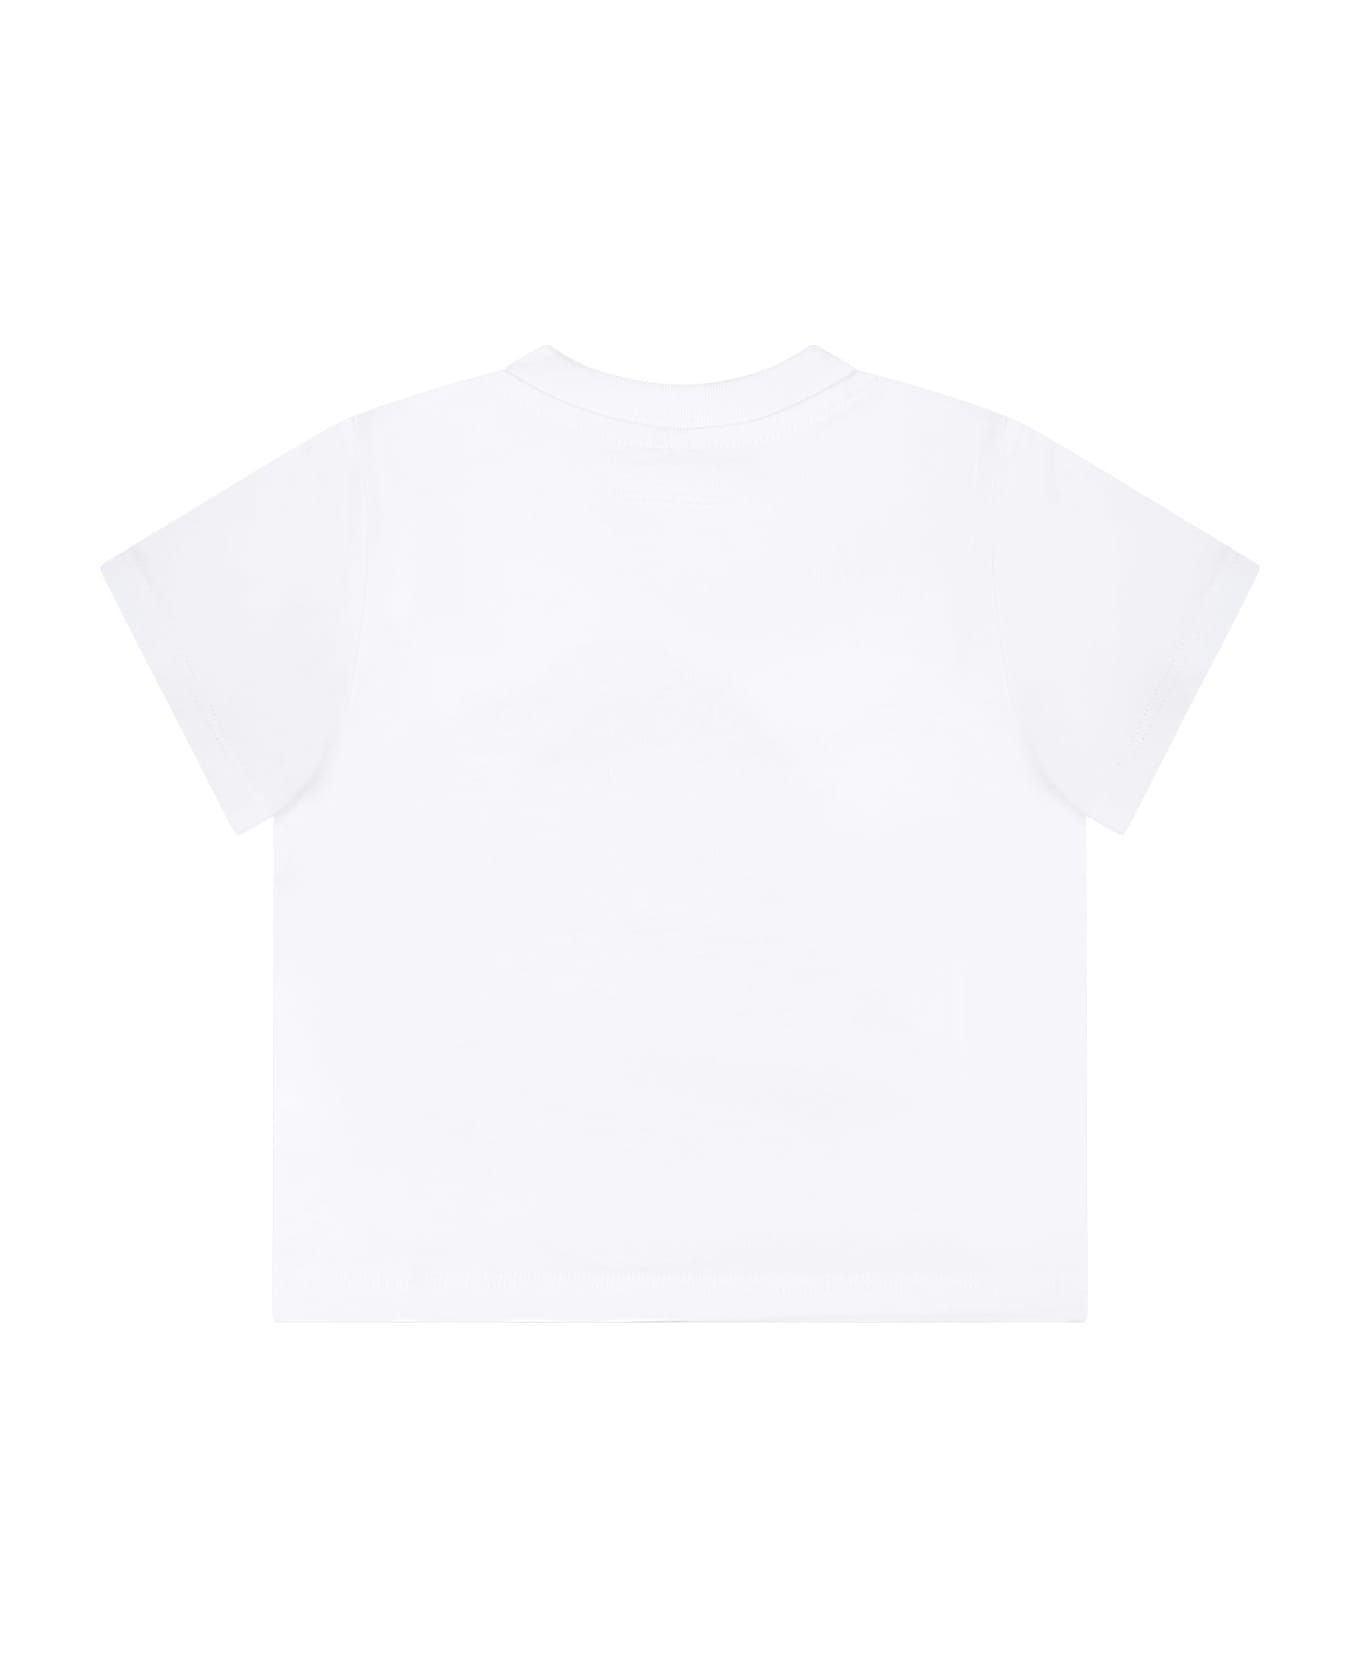 Stella McCartney White T-shirt For Baby Boy With Shark Print - WHITE